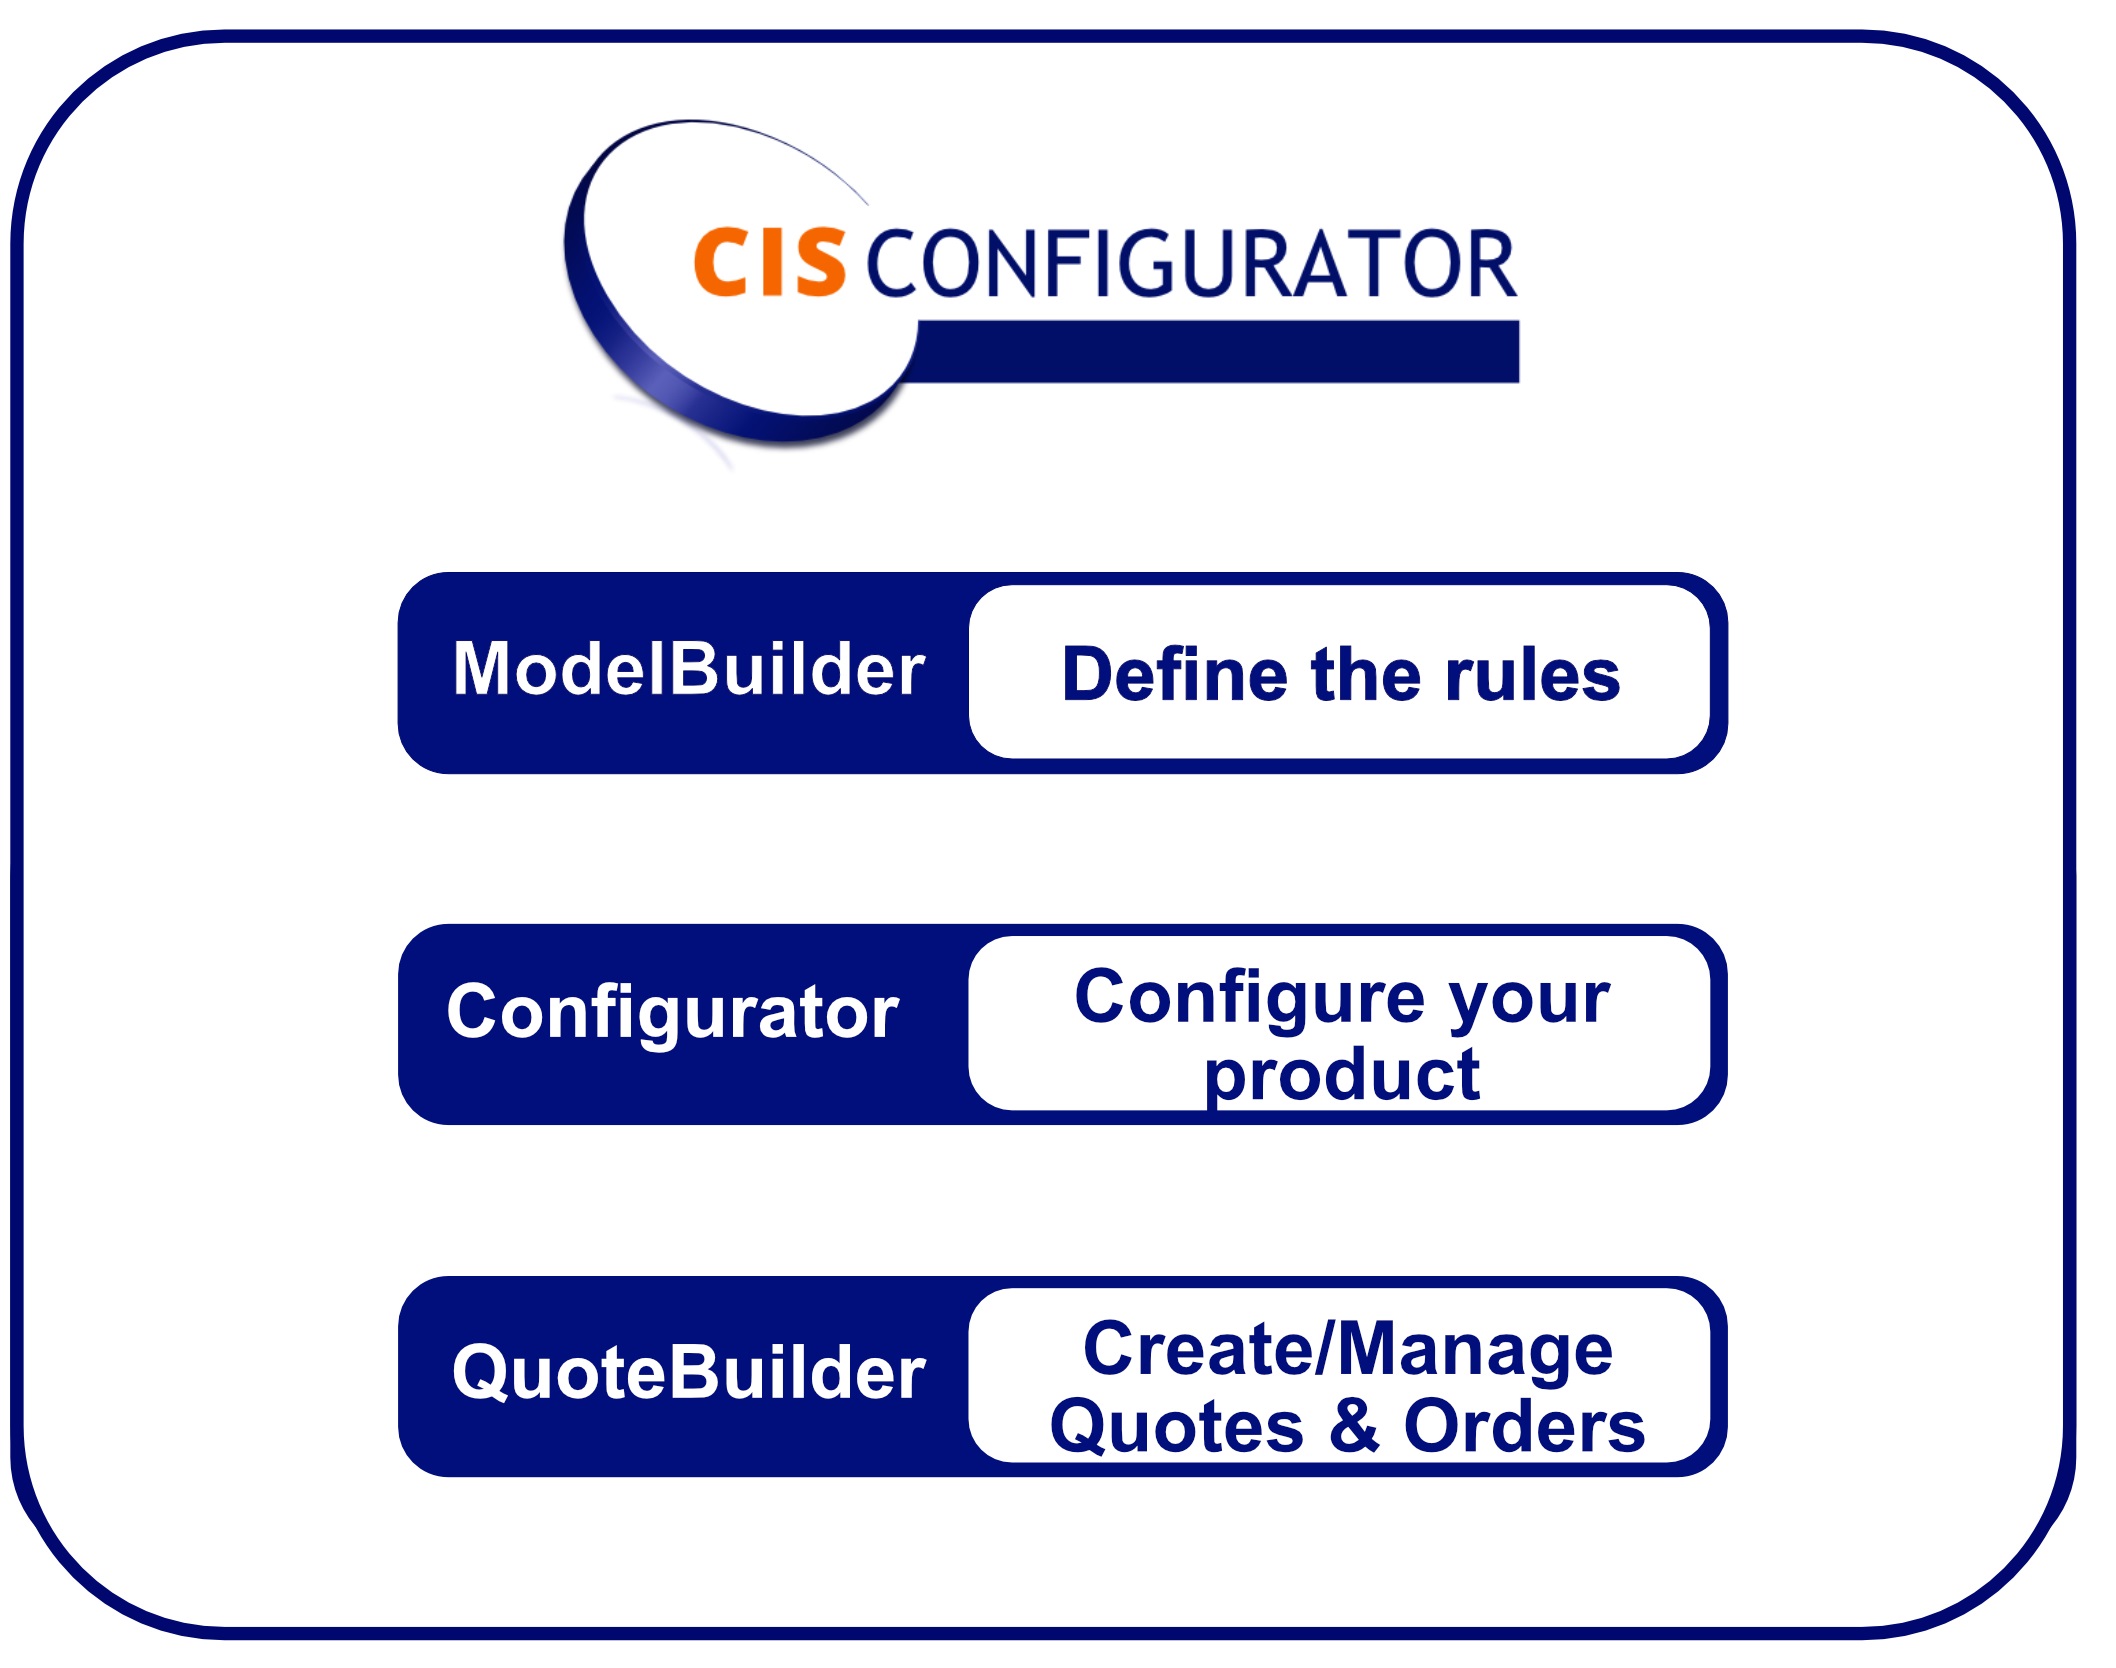 CIS Configurator d5d2f070-75d8-481f-8708-b7c74151e54e.jpeg